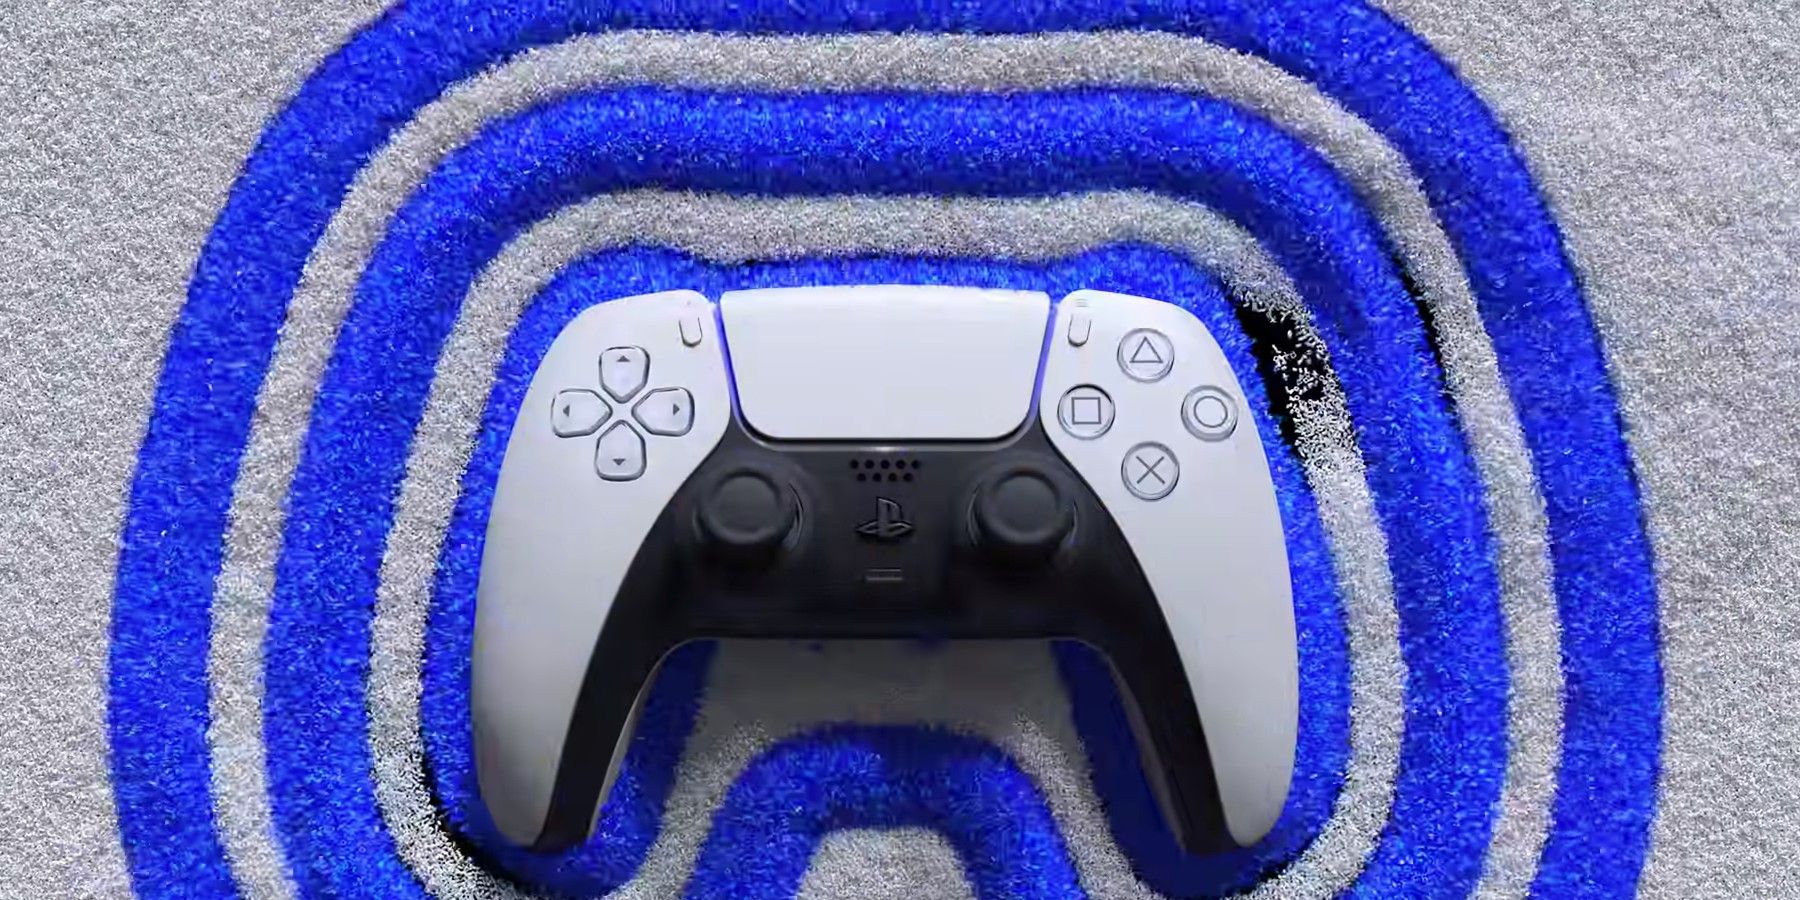 PS5 DualSense Controller Hidden Details, Internal Hardware Revealed